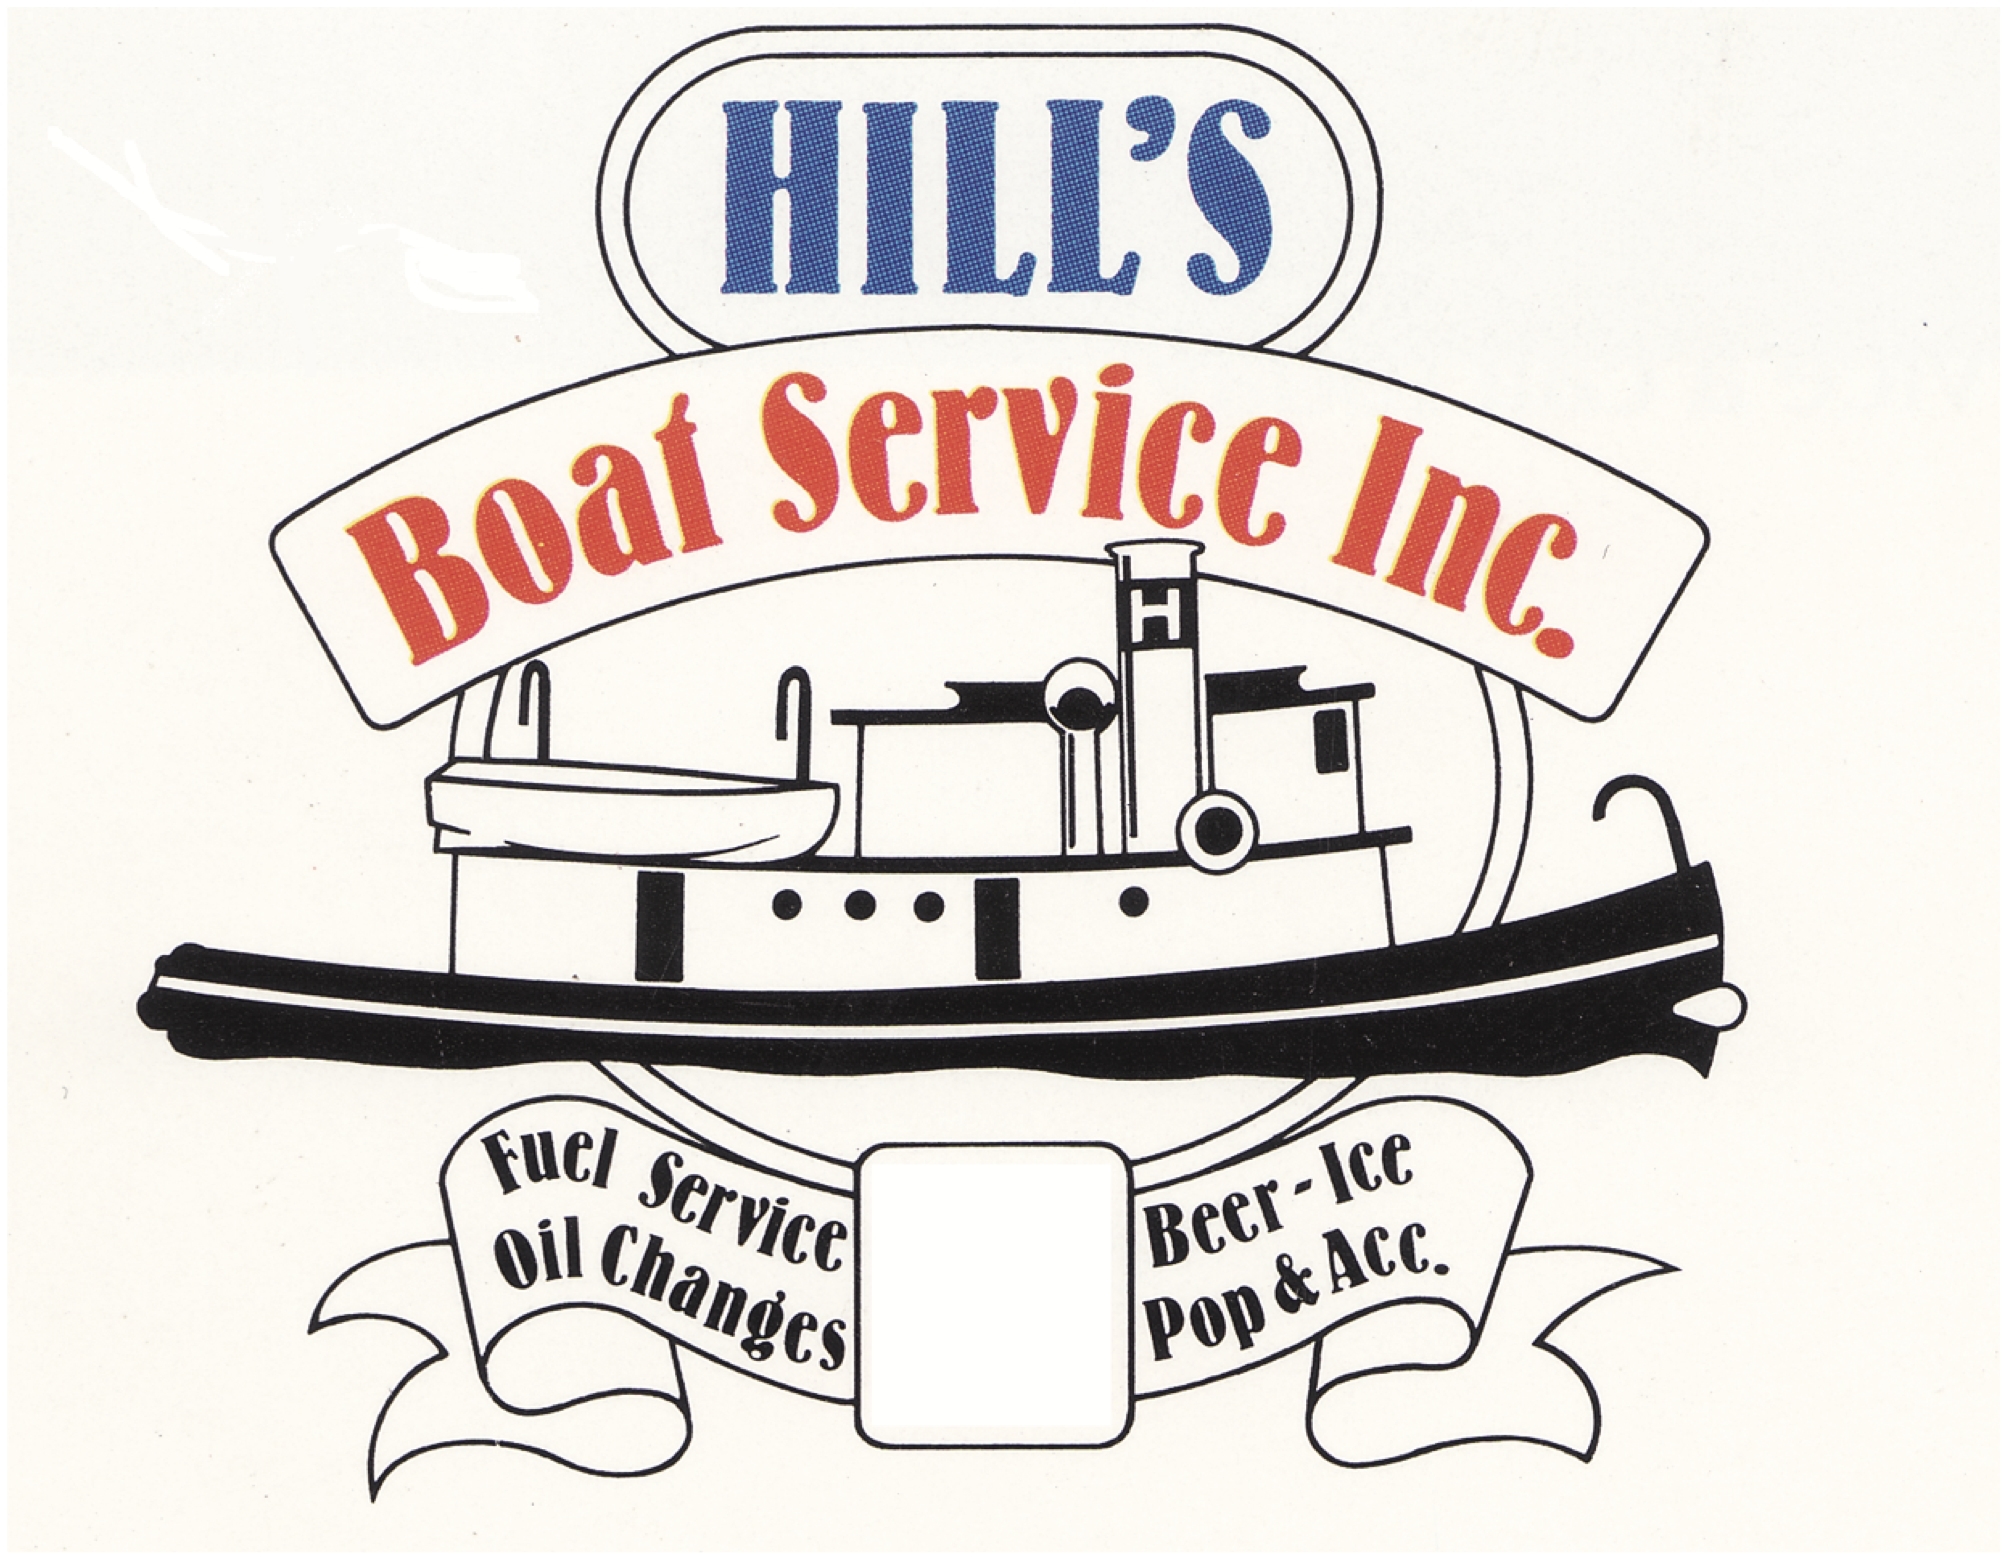 Hills Boat Service